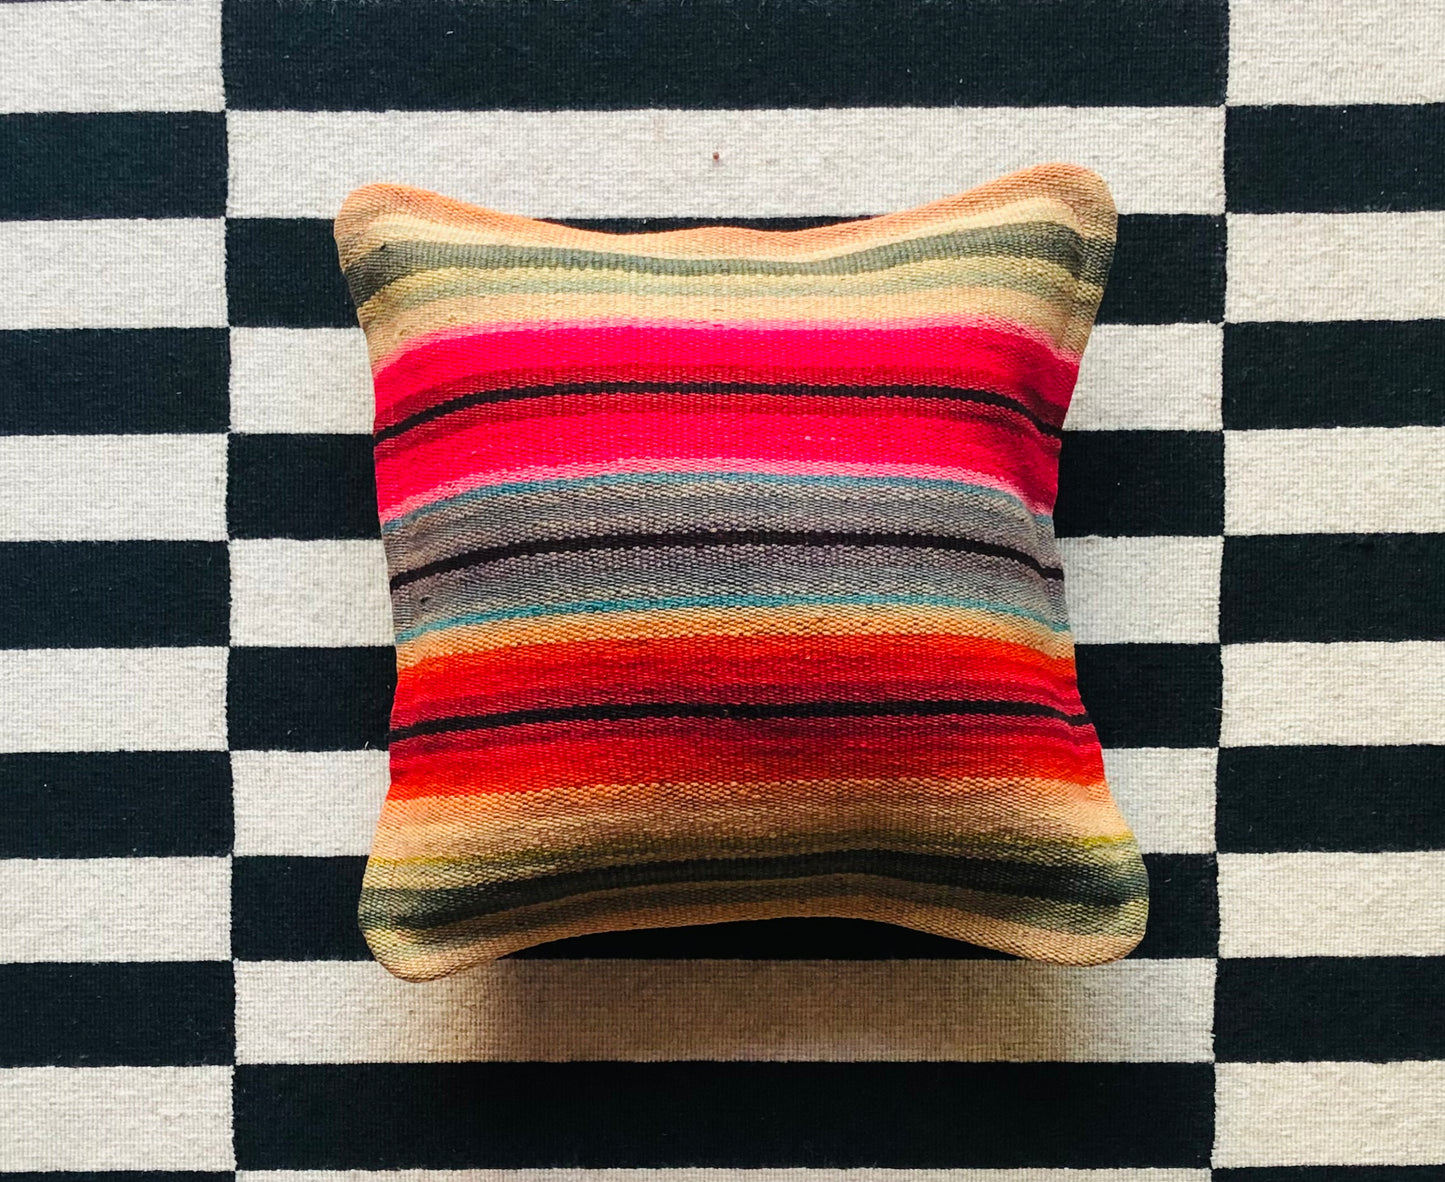 Peruvian cushion